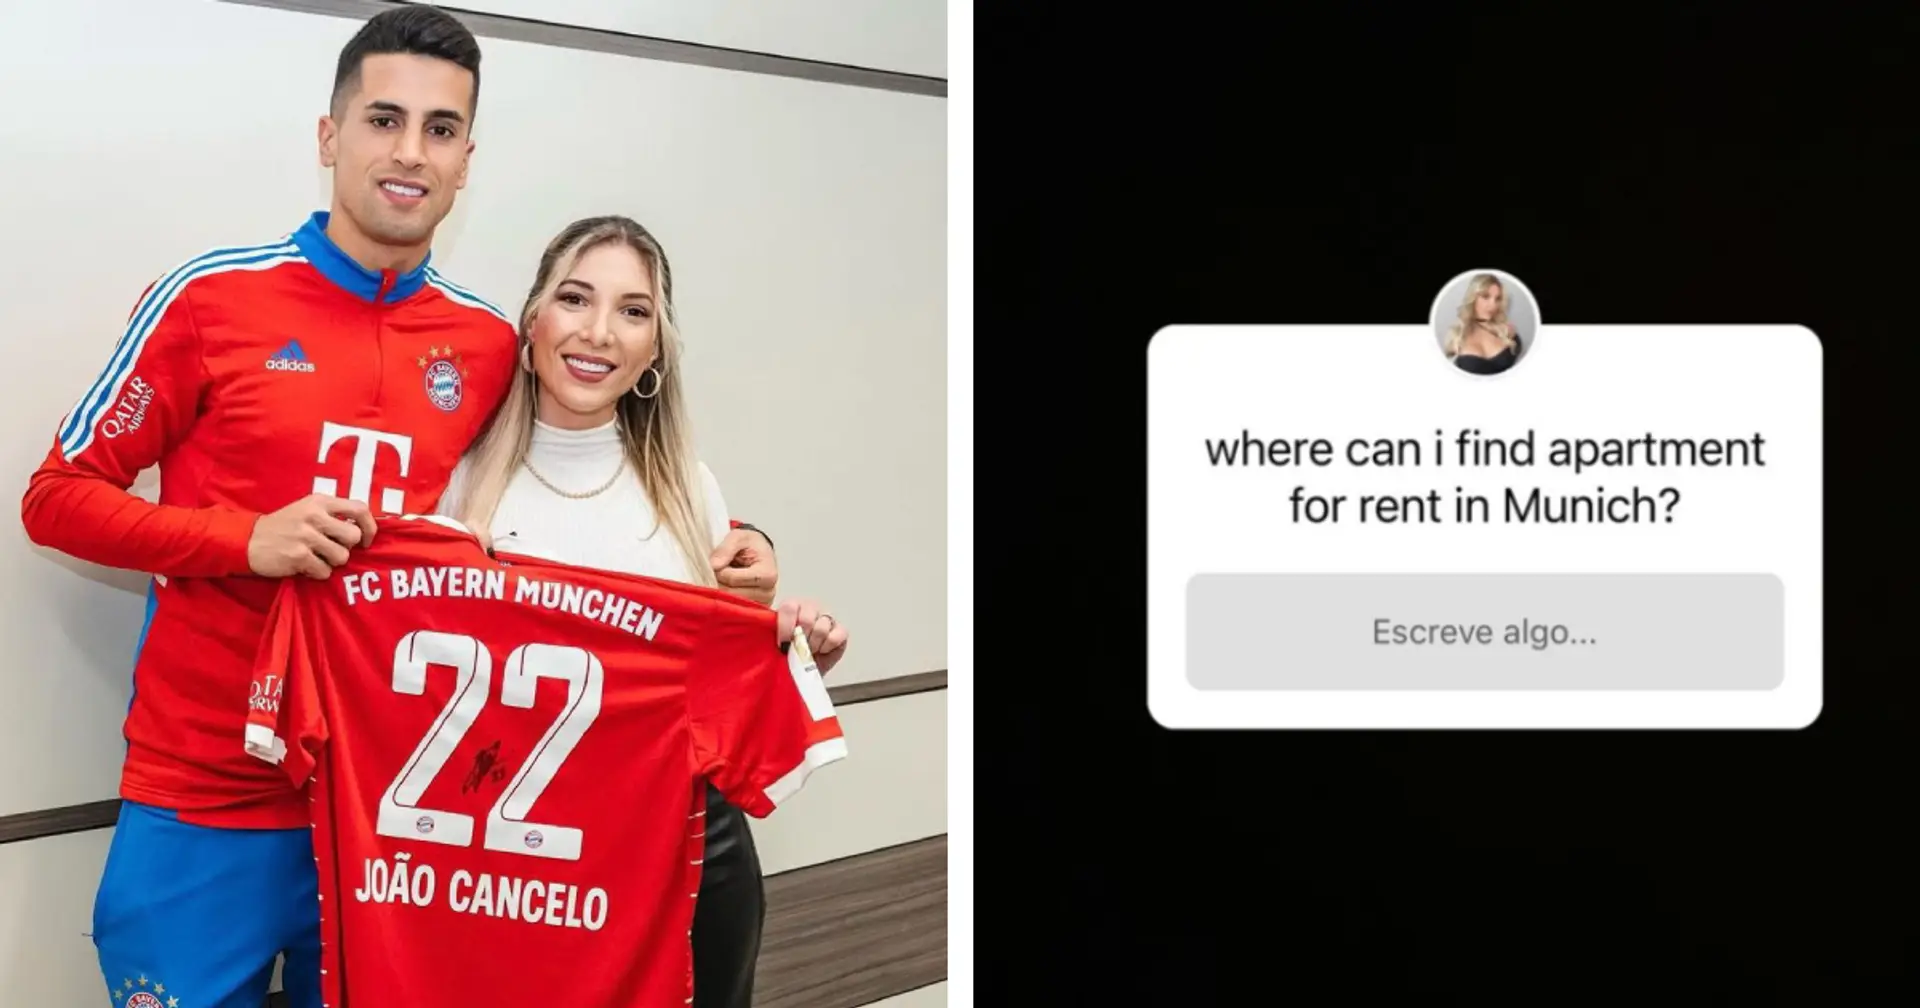 Kurios: Cancelos Freundin bittet Instagram-Follower um Hilfe bei der Wohnungssuche